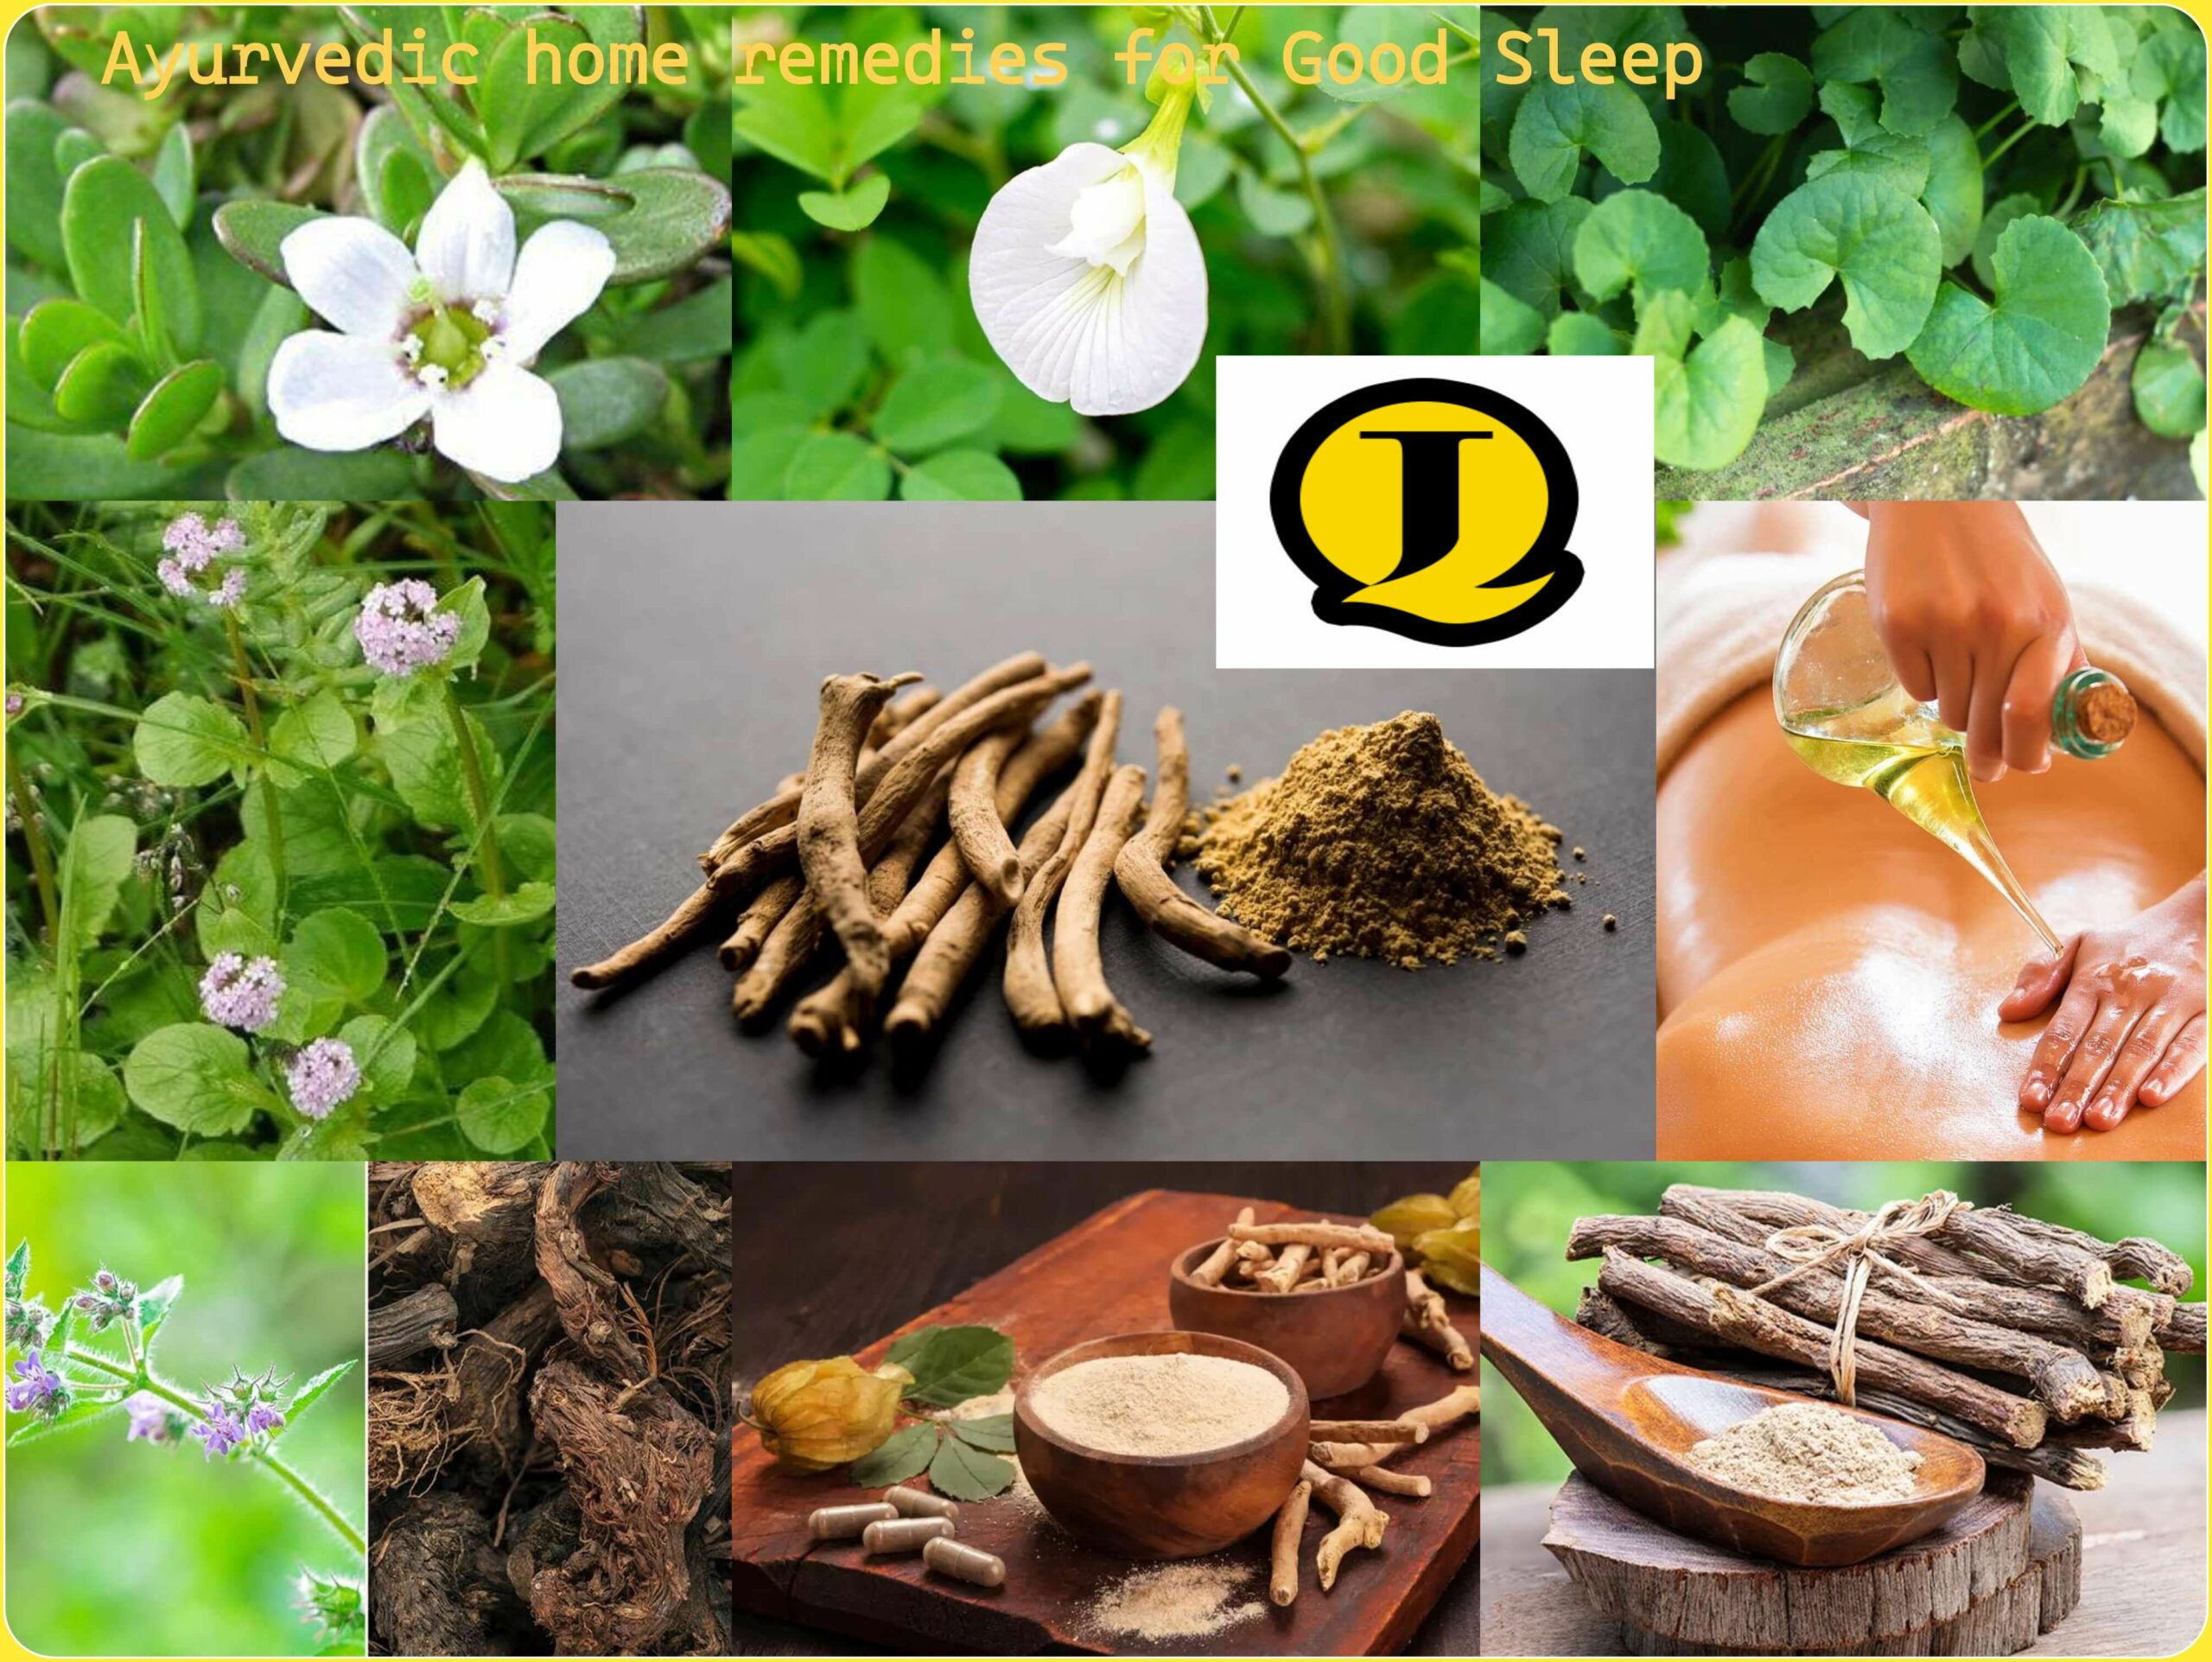 Ayurvedic home remedies for Good Sleep